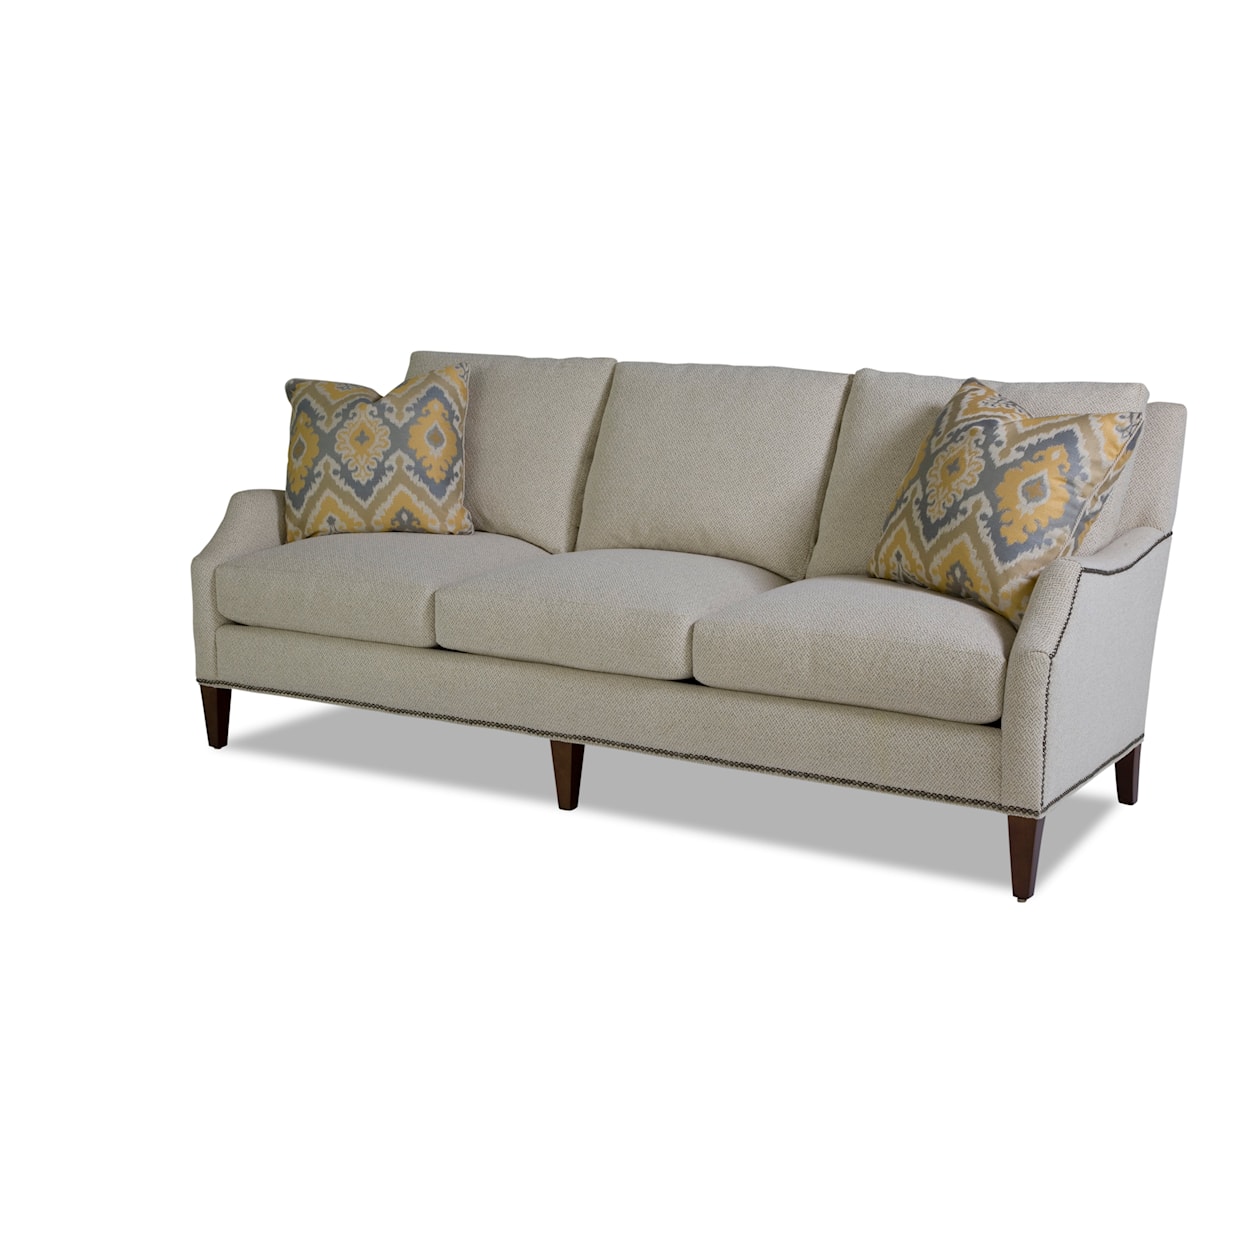 Huntington House 2200 Metro Collection 3-Cushion Sofa